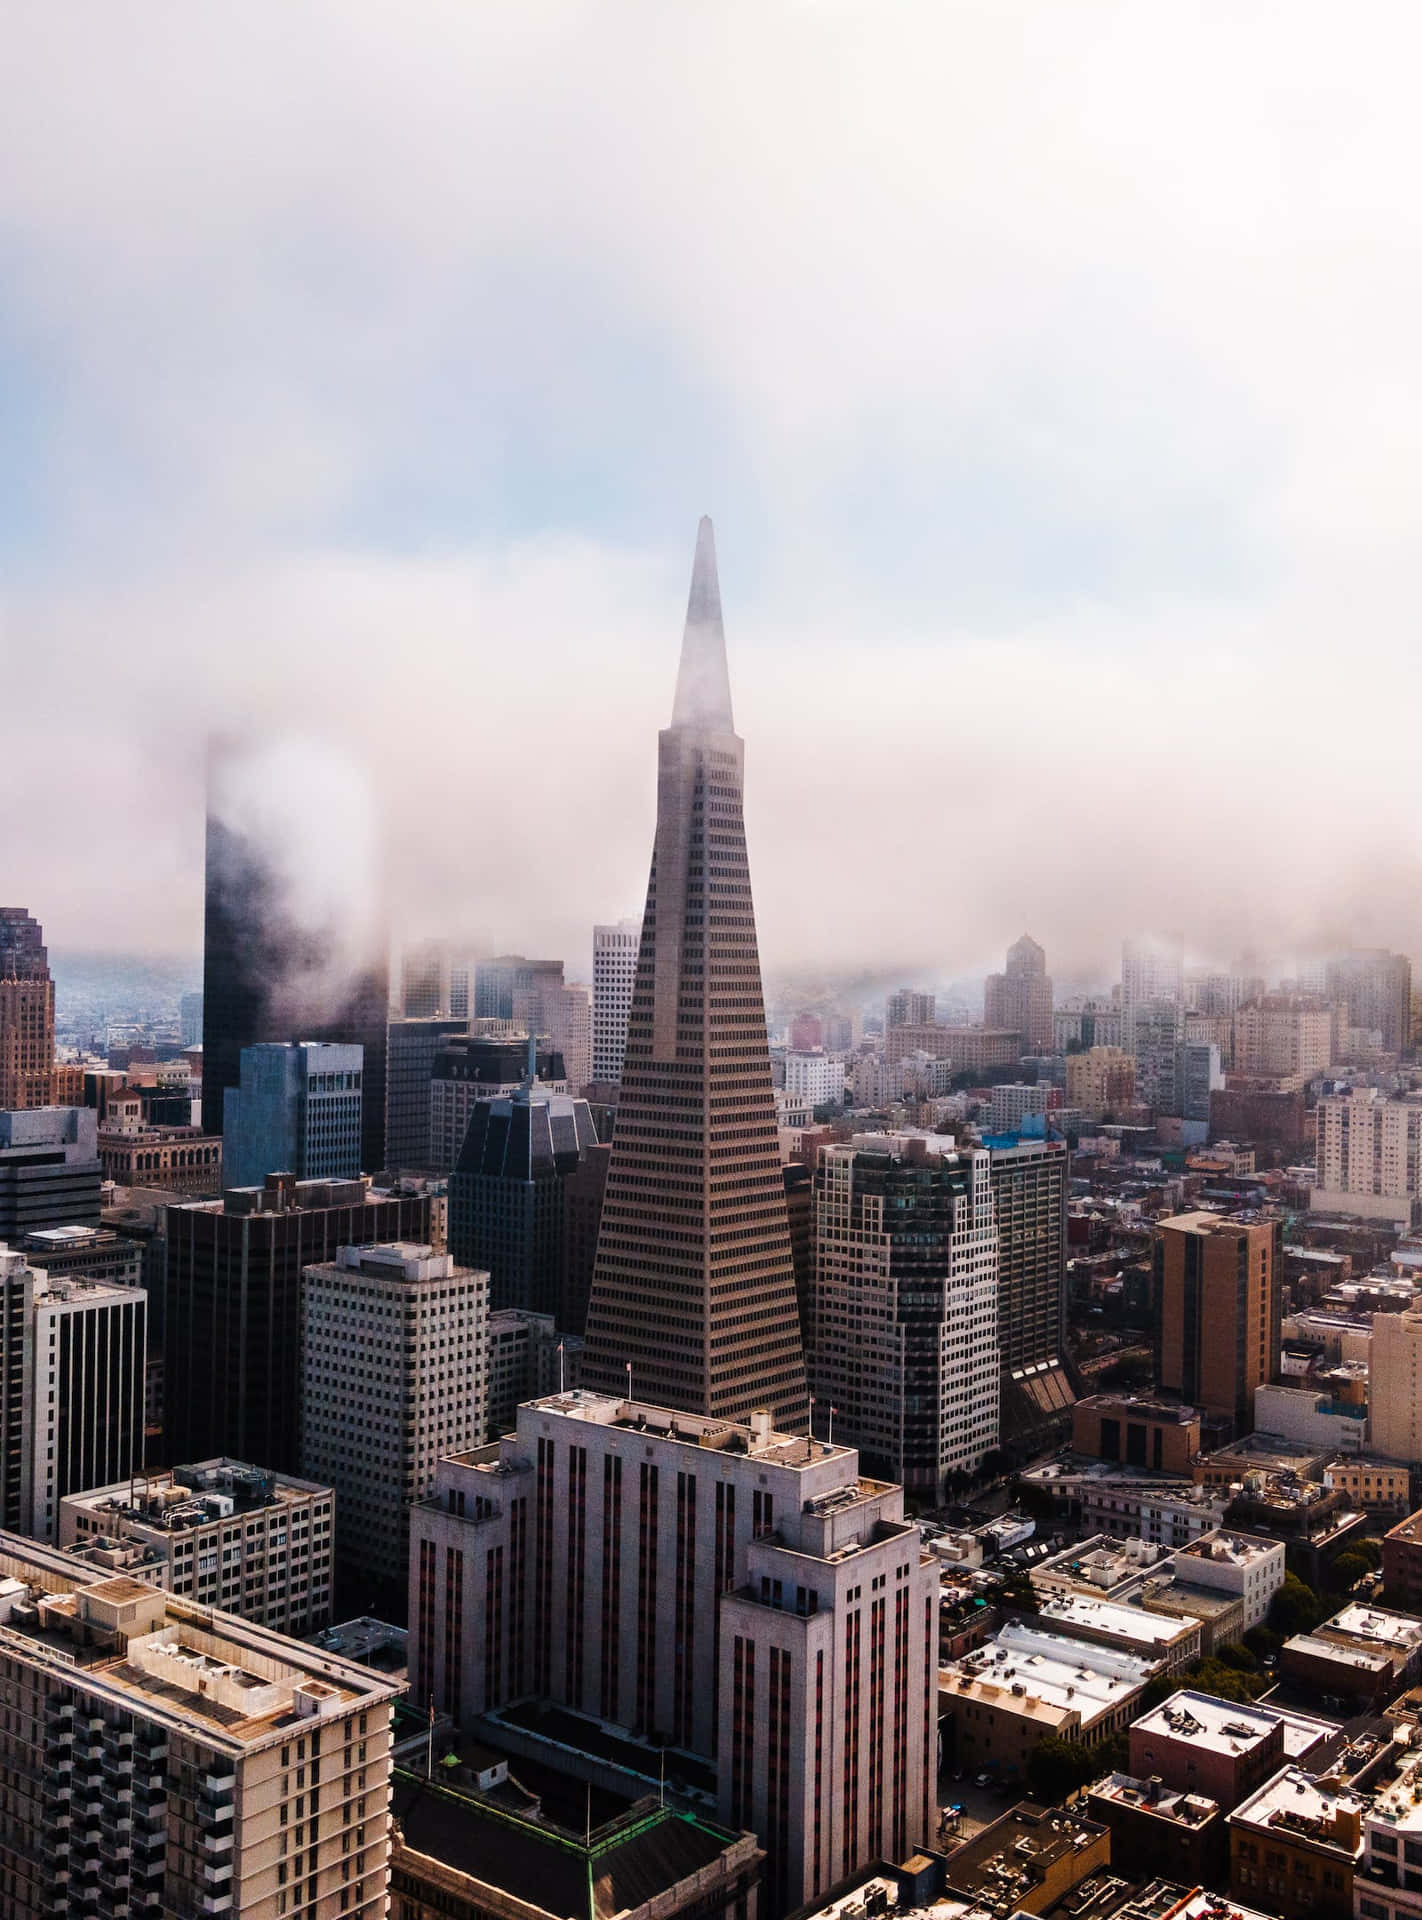 San Francisco fog brings the Golden Gate Bridge to life Wallpaper